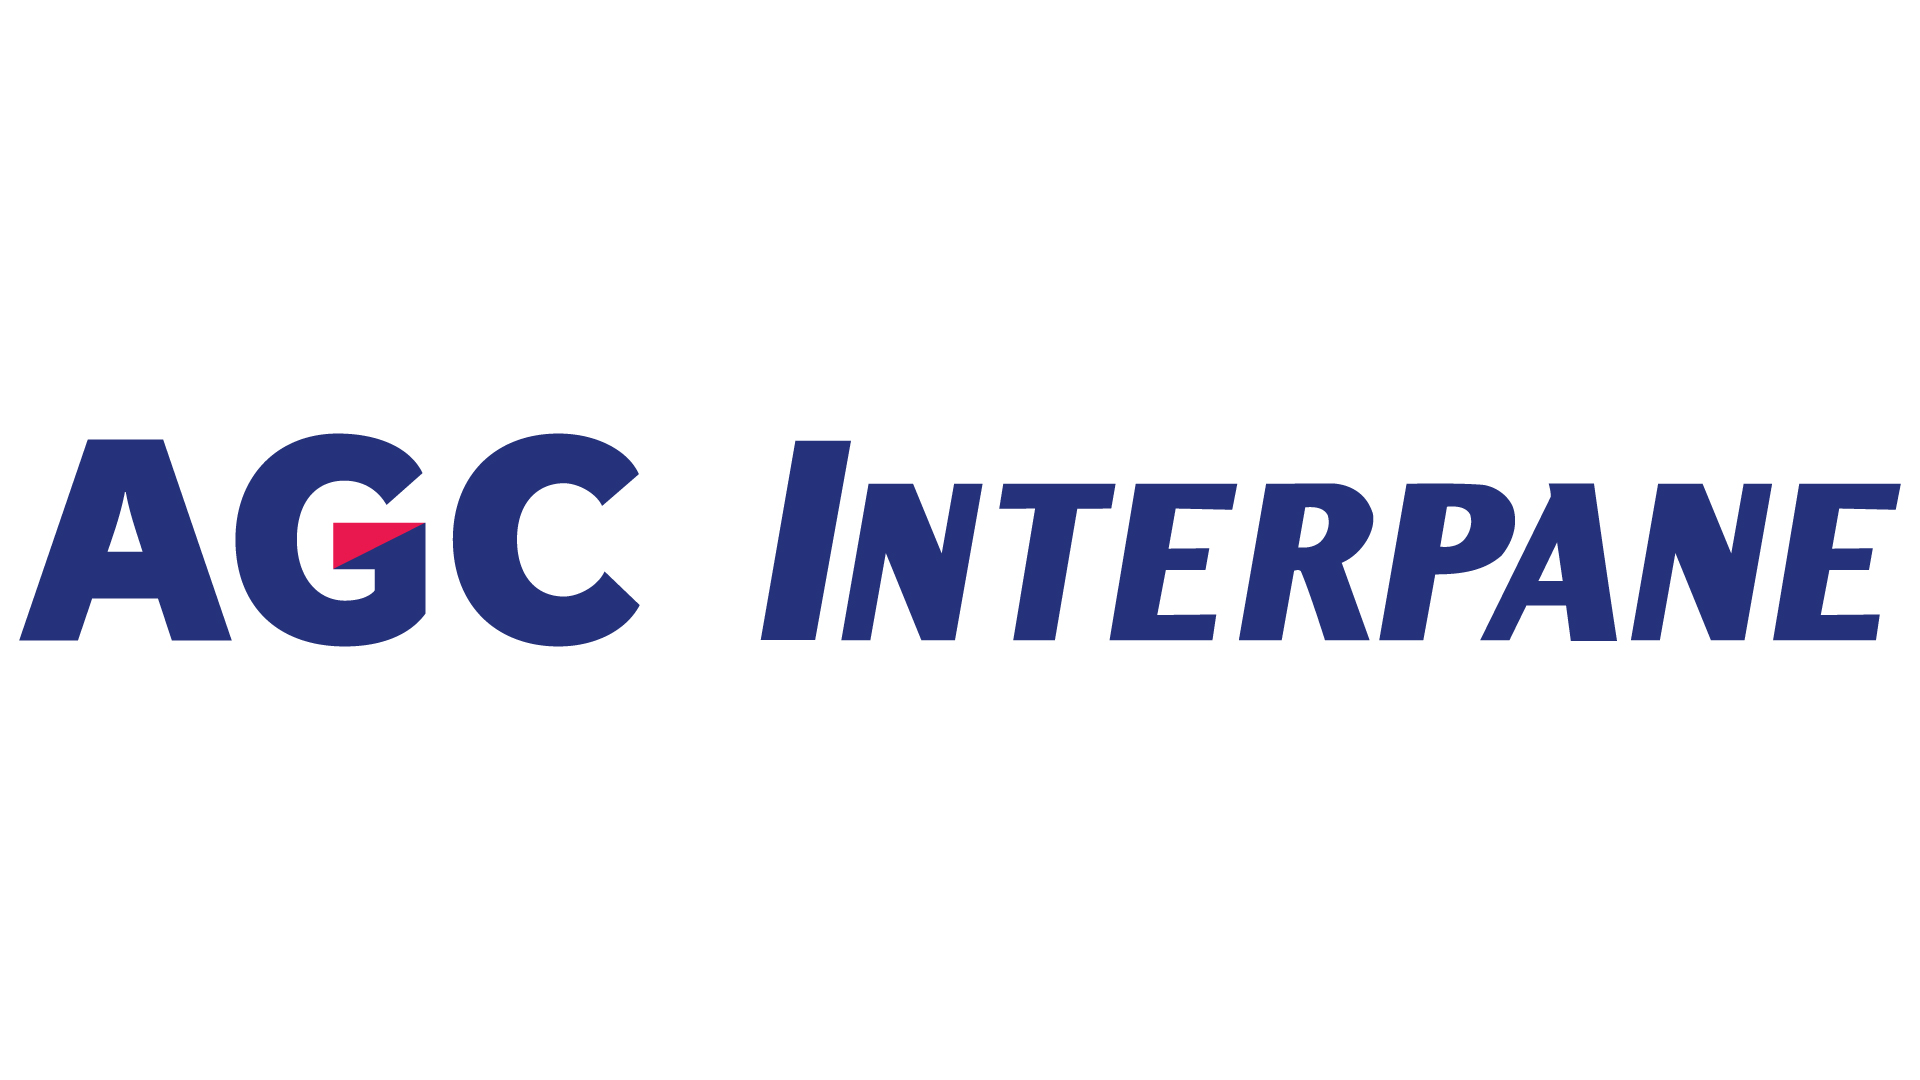 AGC Interpane